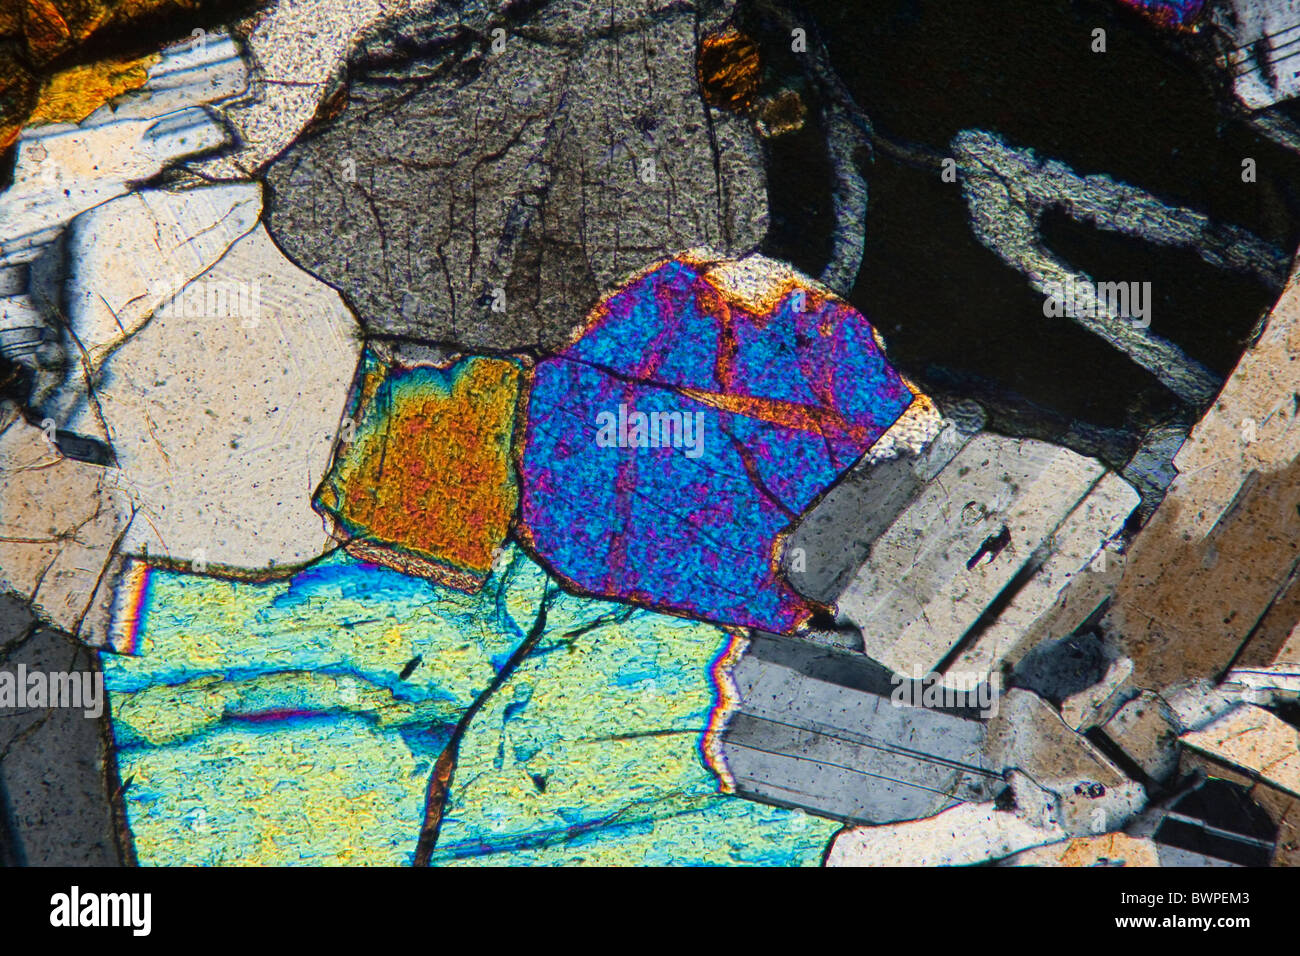 Vent Dolerite, Cross Polarised Microscope Image Stock Photo